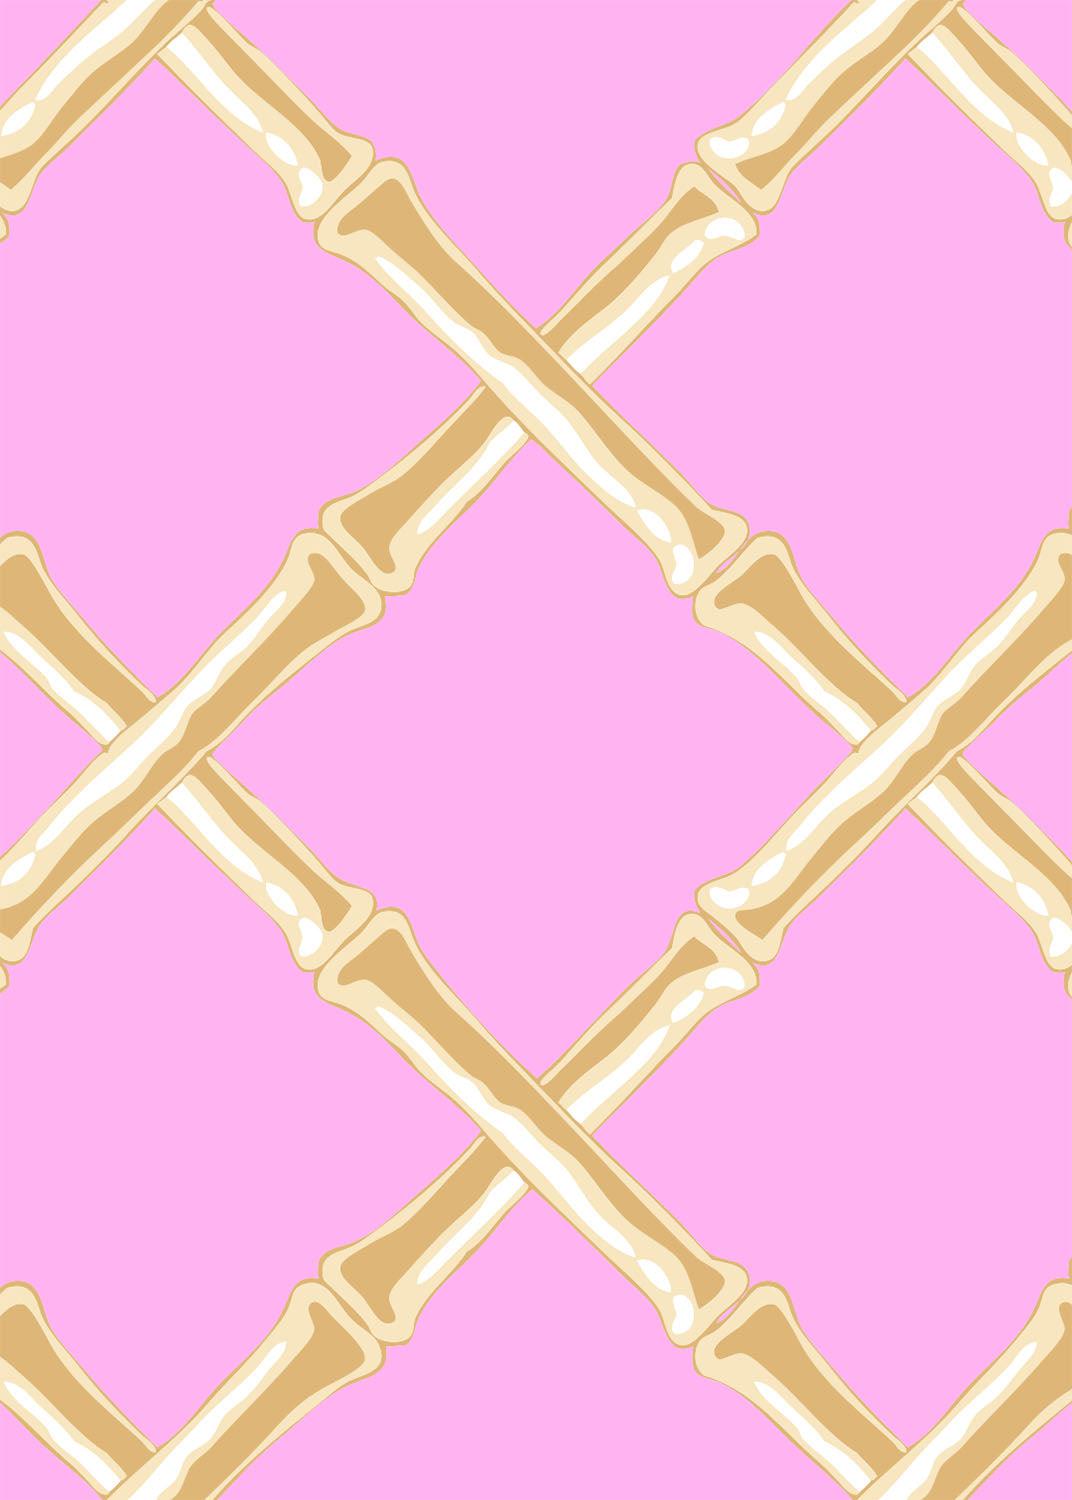 Country Club Skort 17" - Bamboo Lattice Pink/Tan